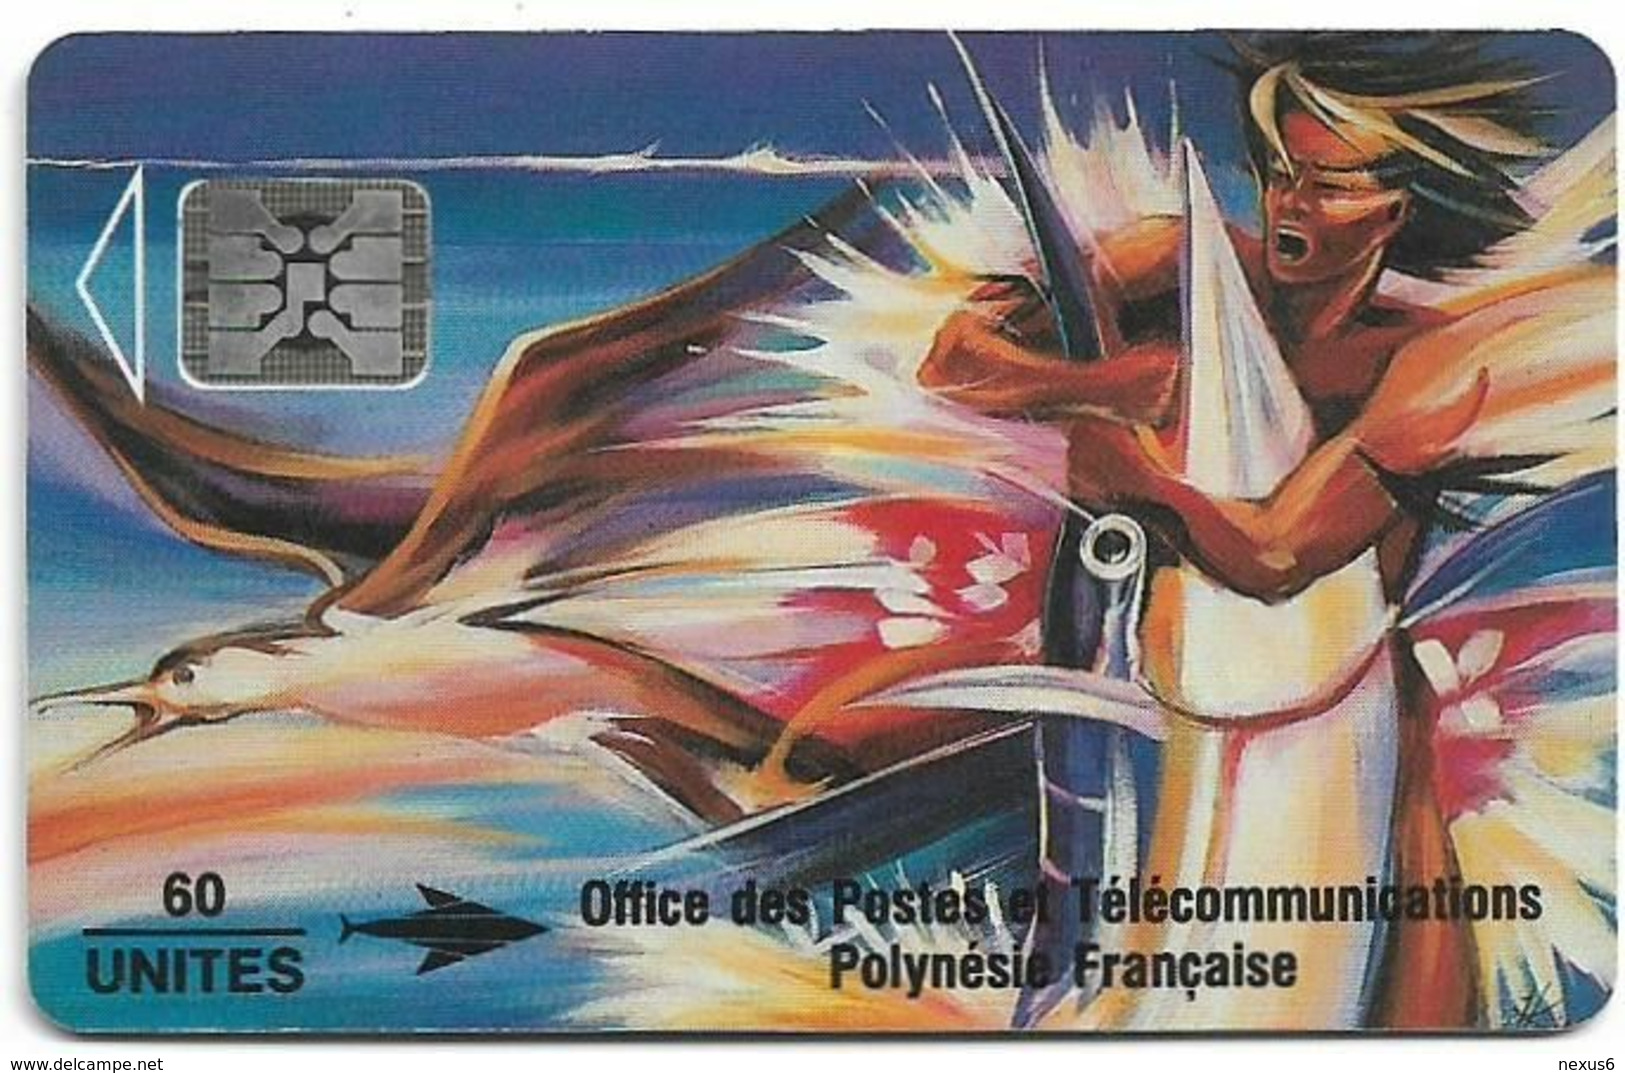 French Polynesia - OPT - Le Rêve à L'Espadon - SC4, Cn. 44225, Matt Finish, 1993, 60Units, Used - Polynésie Française